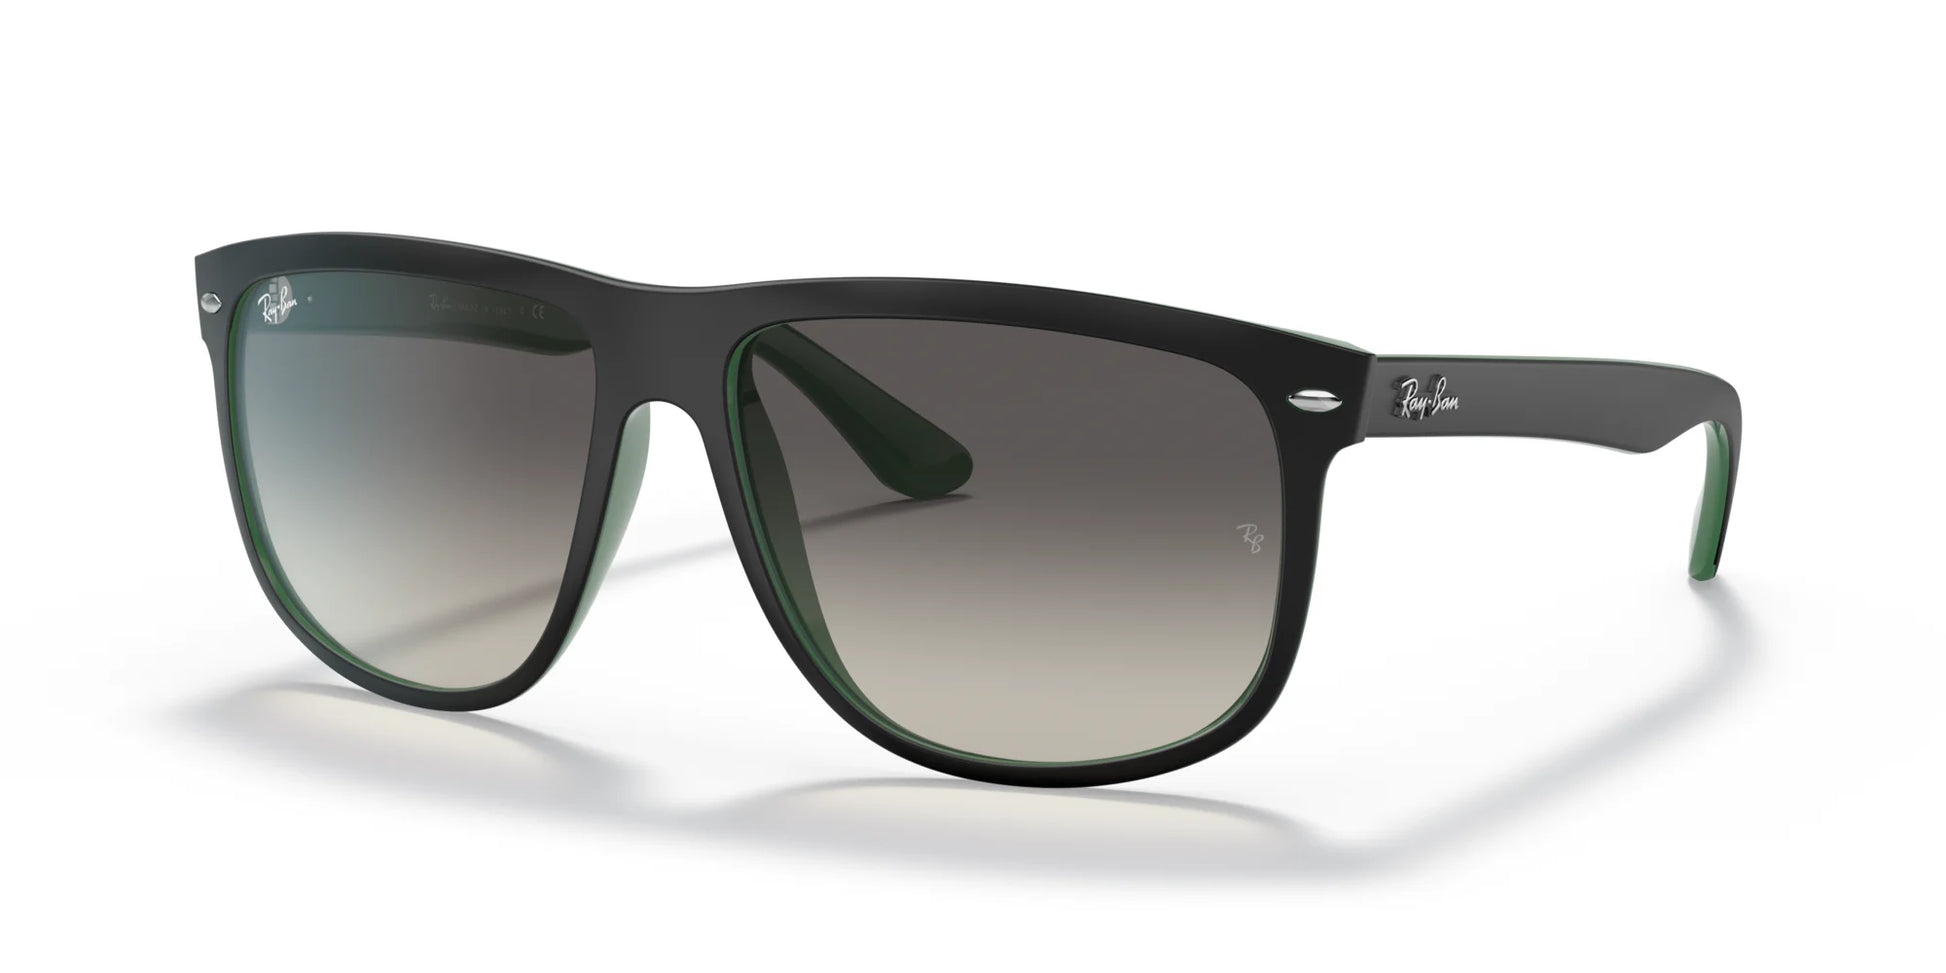 Ray-Ban BOYFRIEND RB4147 Sunglasses Black / Grey Gradient